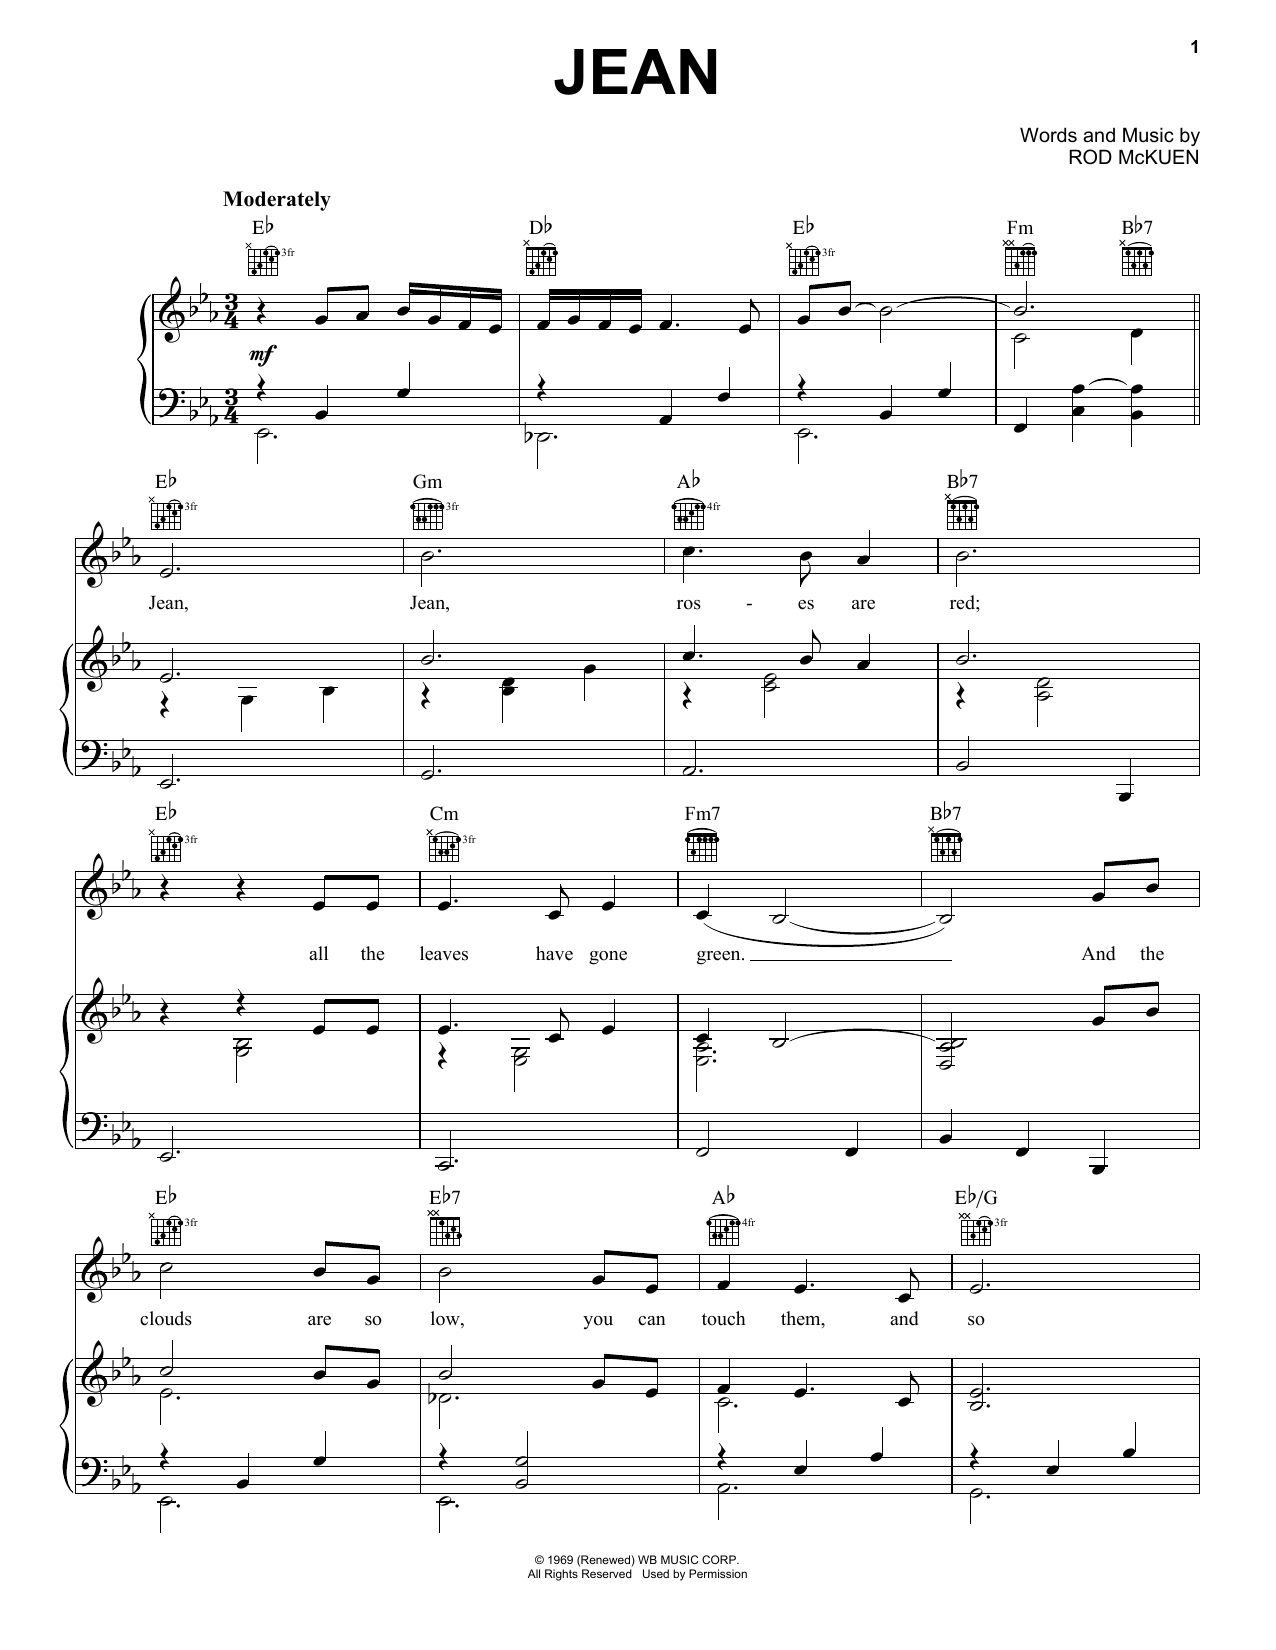 Oliver Jean Sheet Music Notes & Chords for Melody Line, Lyrics & Chords - Download or Print PDF